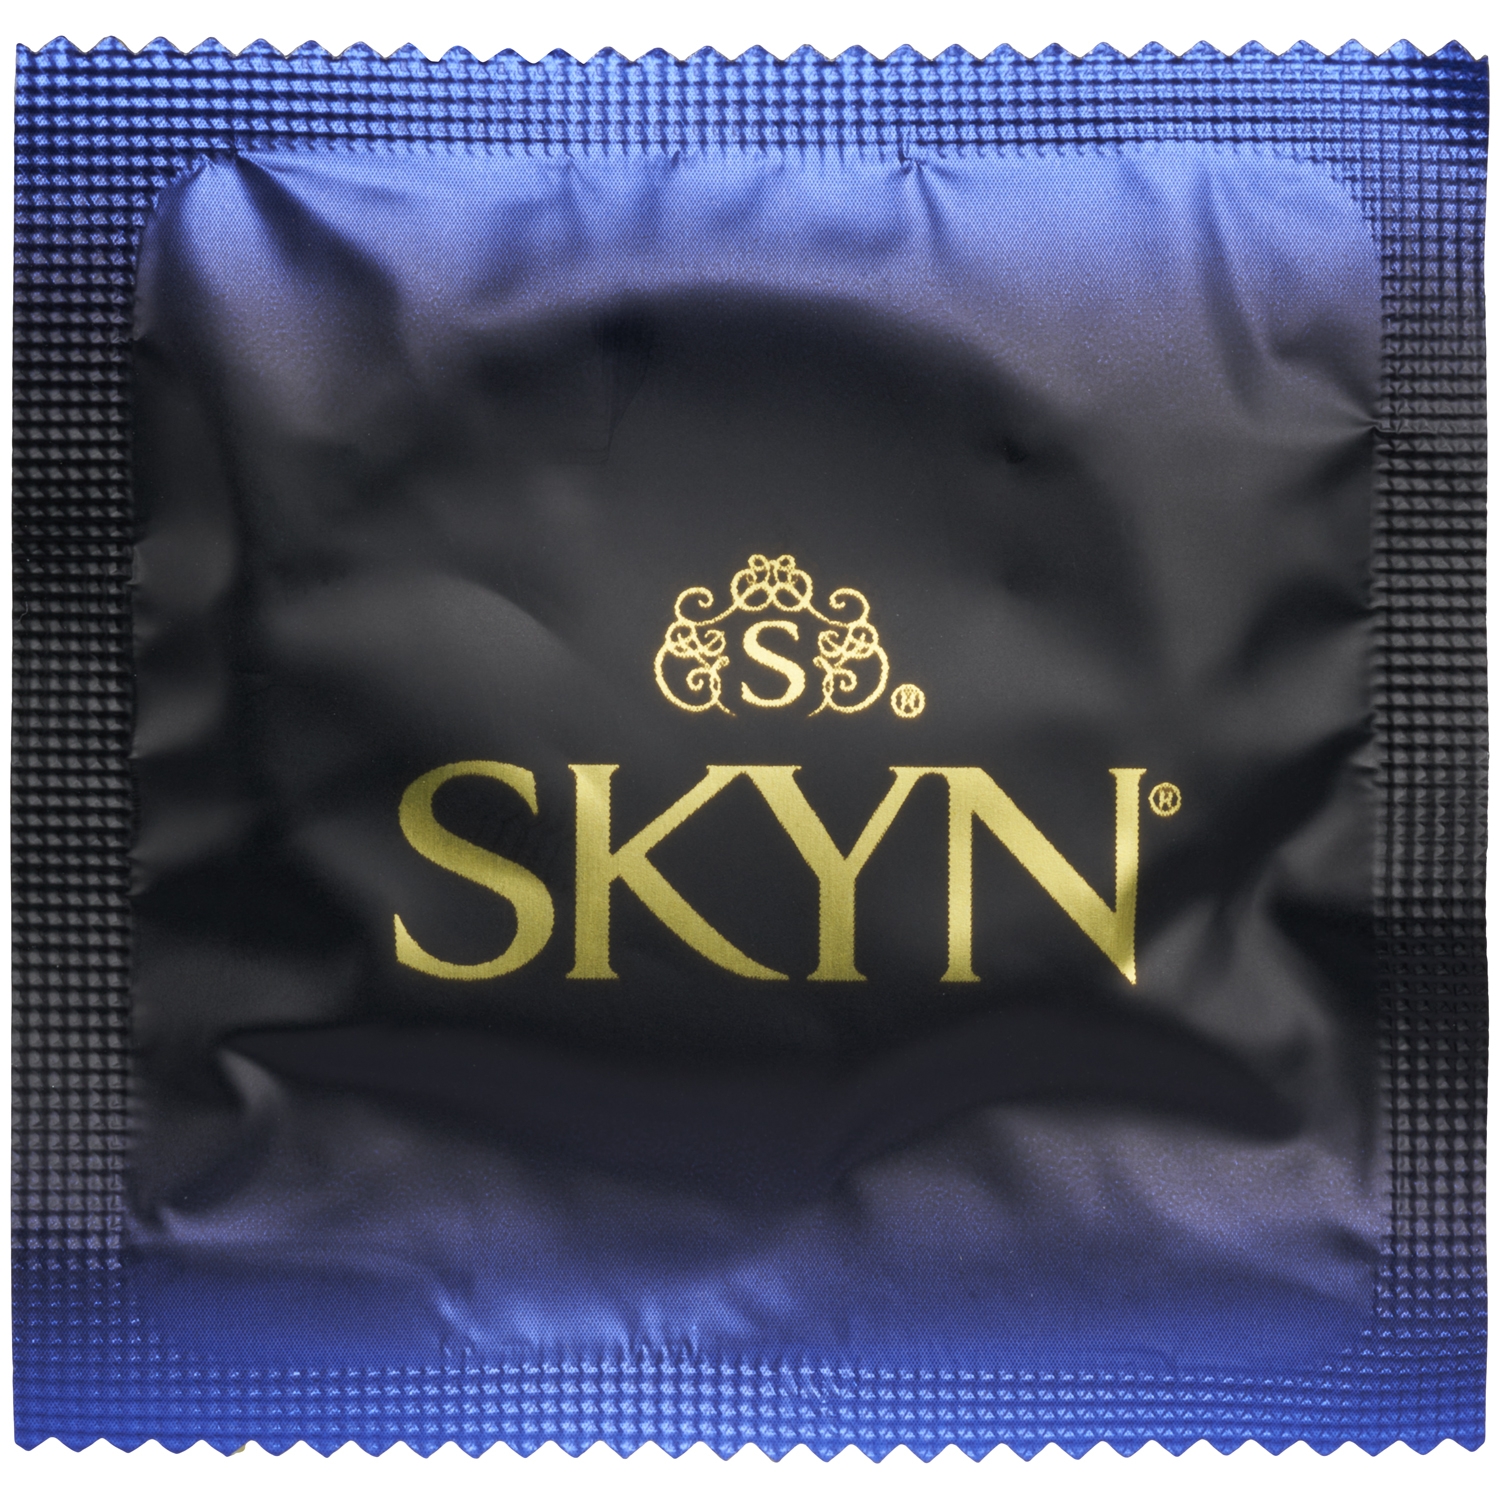 SKYN Skyn Elite Lateksfrie Kondomer 20 stk.